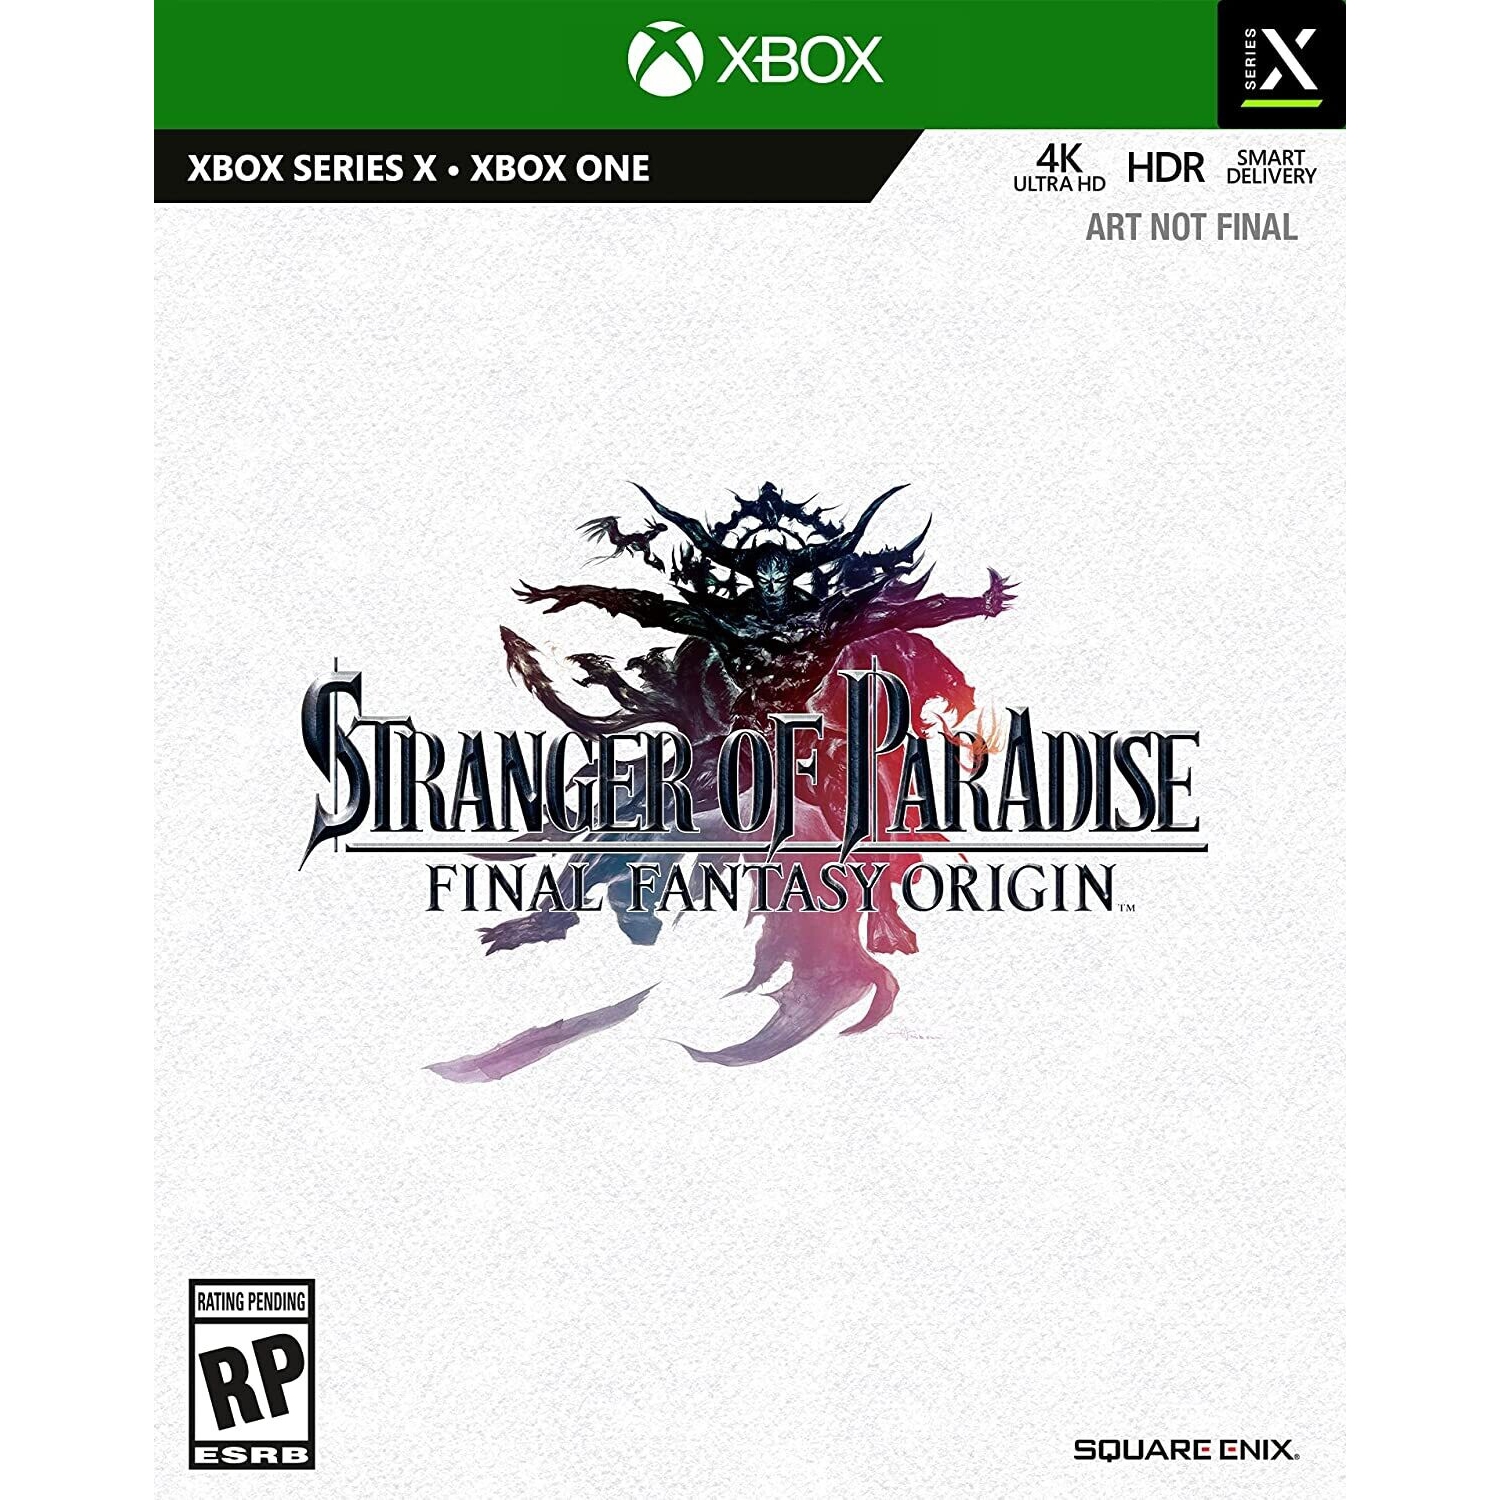 Stranger of Paradise Final Fantasy Origin for Xbox One and Xbox Series X [VIDEOGAMES] Xbox One, Xbox Series X